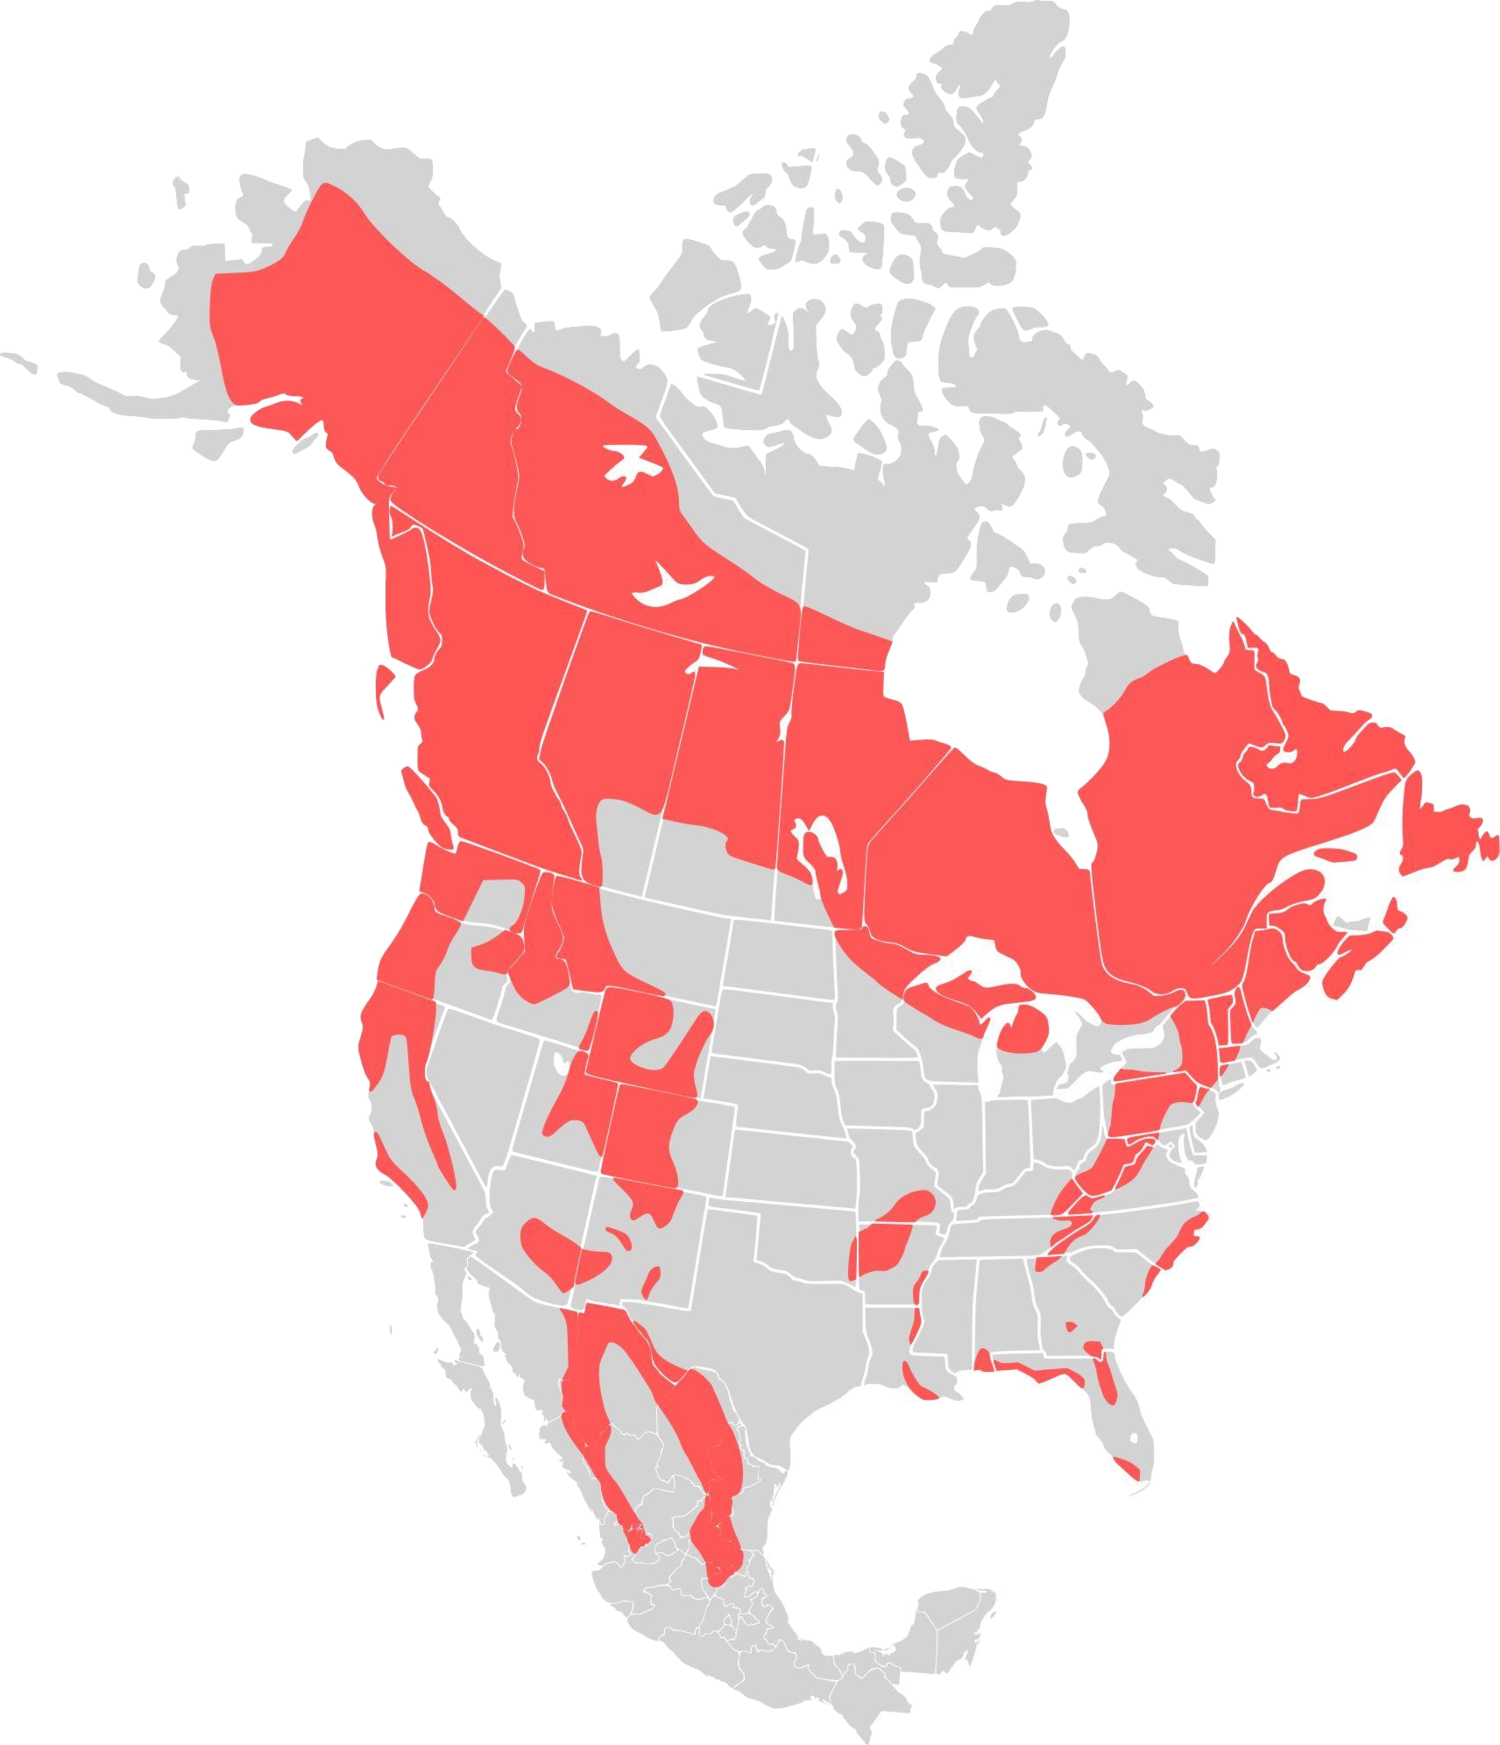 Black Bear Habitat Map